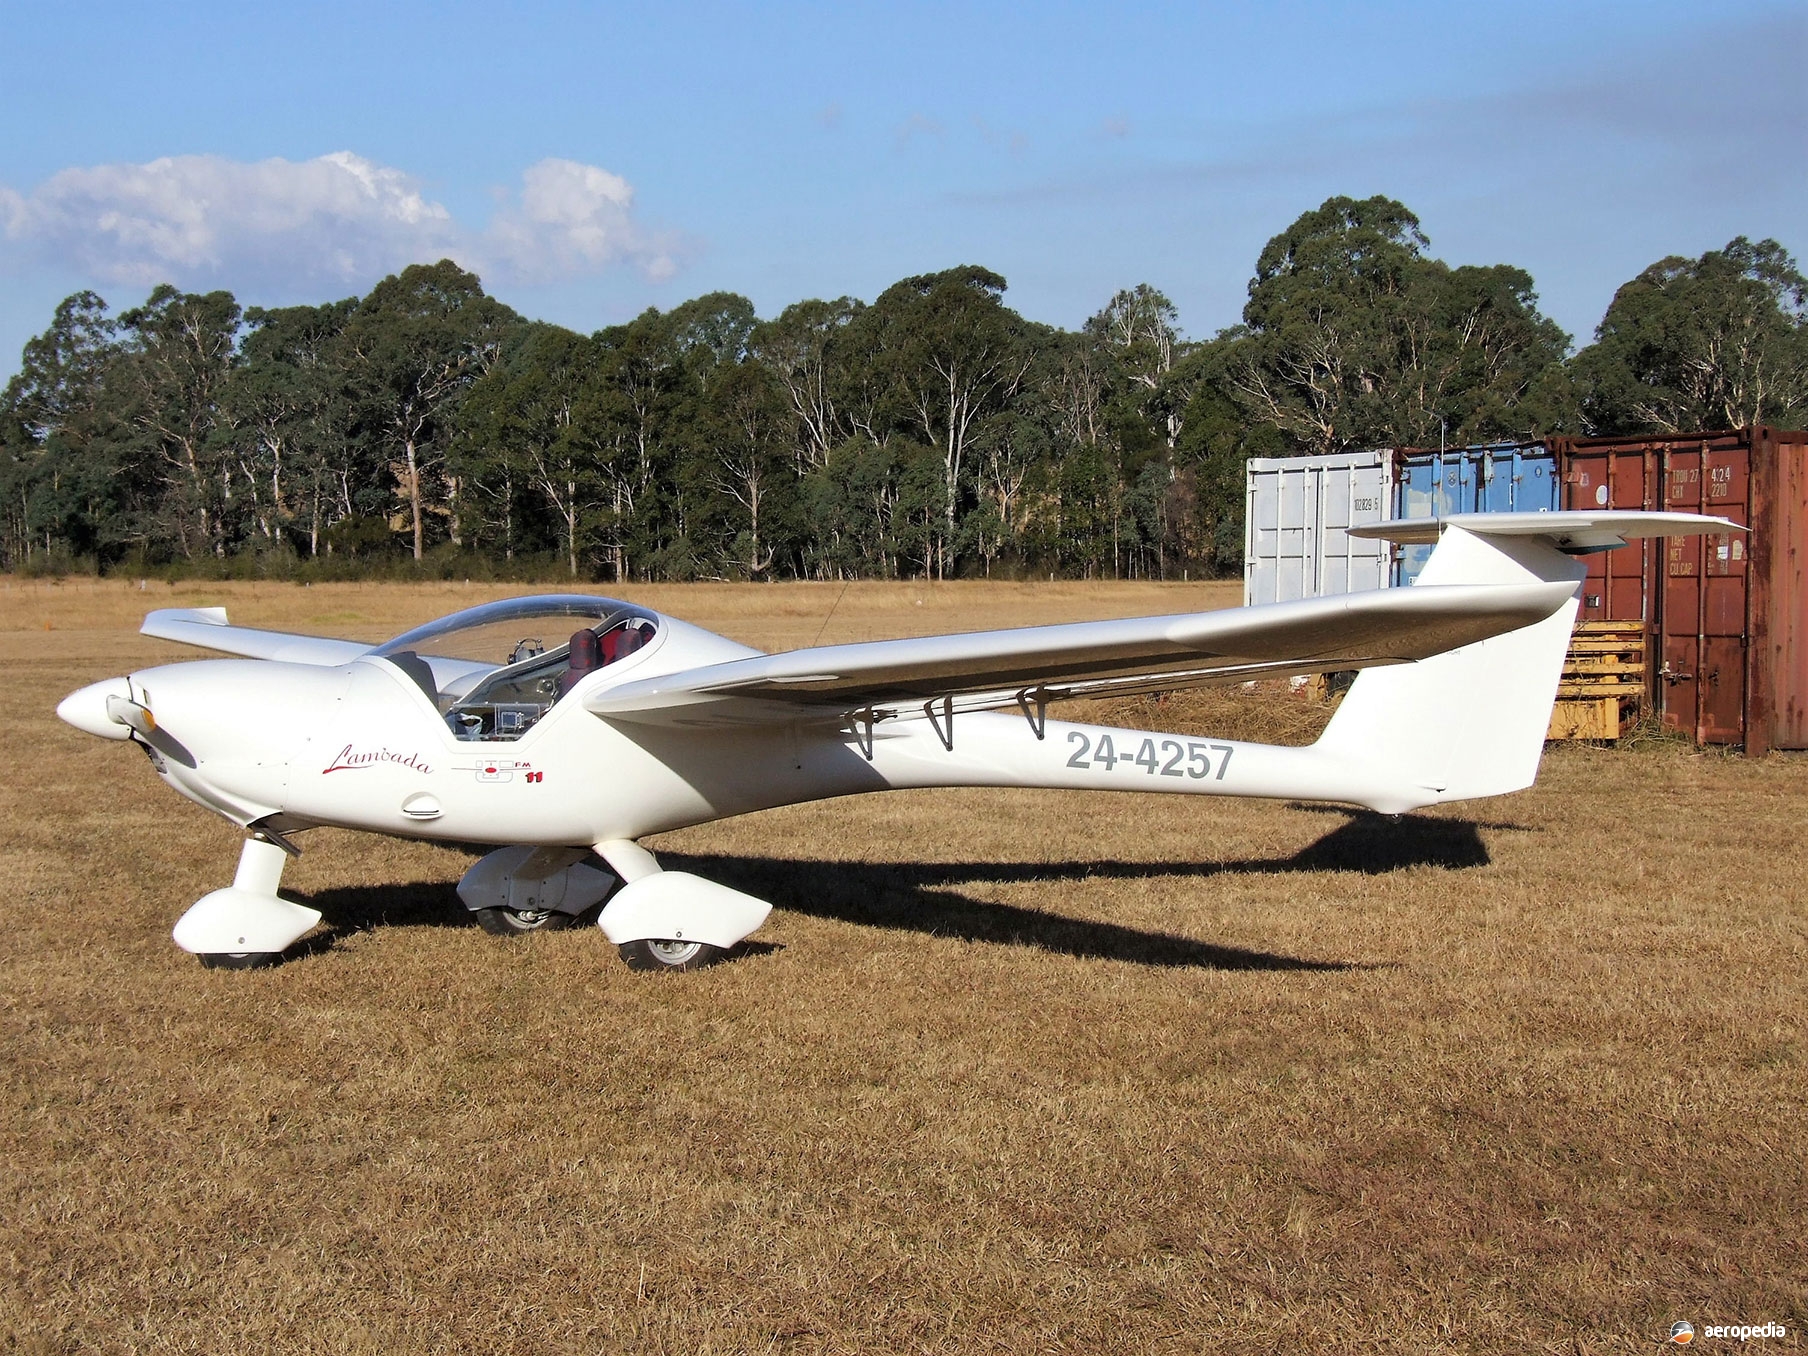 https://aeropedia.com.au/wp-content/uploads/2019/05/Urbanair-UFM-11-Lambada_Aeropedia-The-Encyclopedia-of-Aircraft.jpg